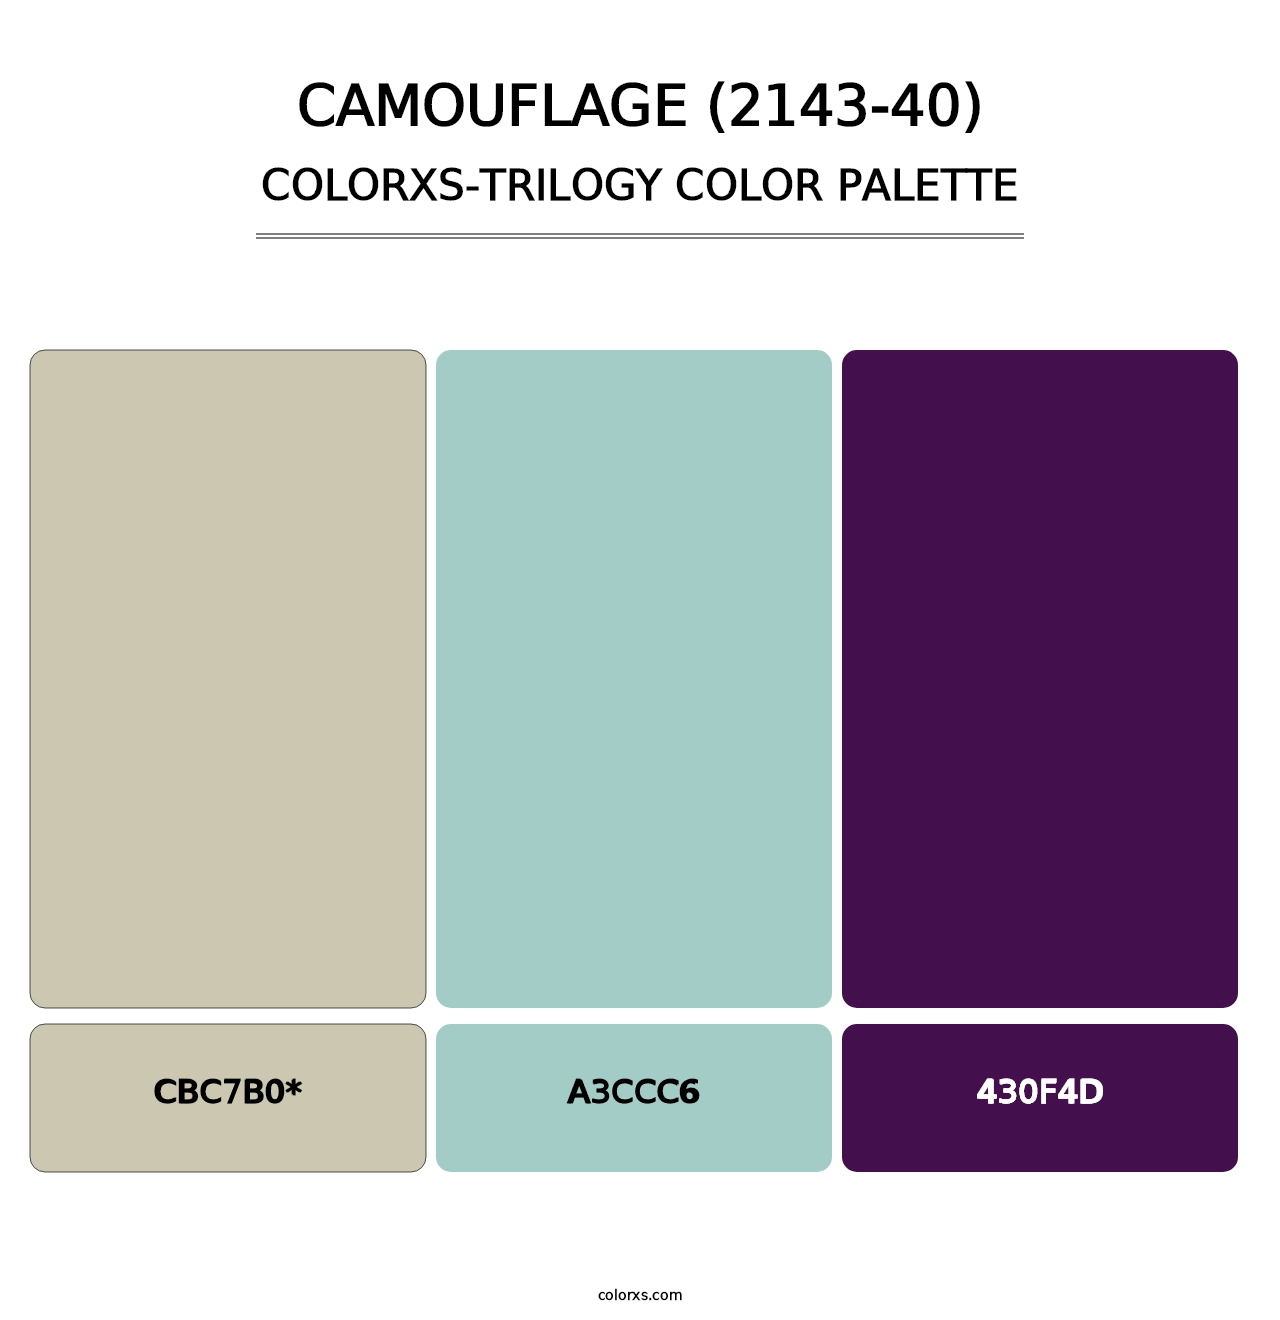 Camouflage (2143-40) - Colorxs Trilogy Palette